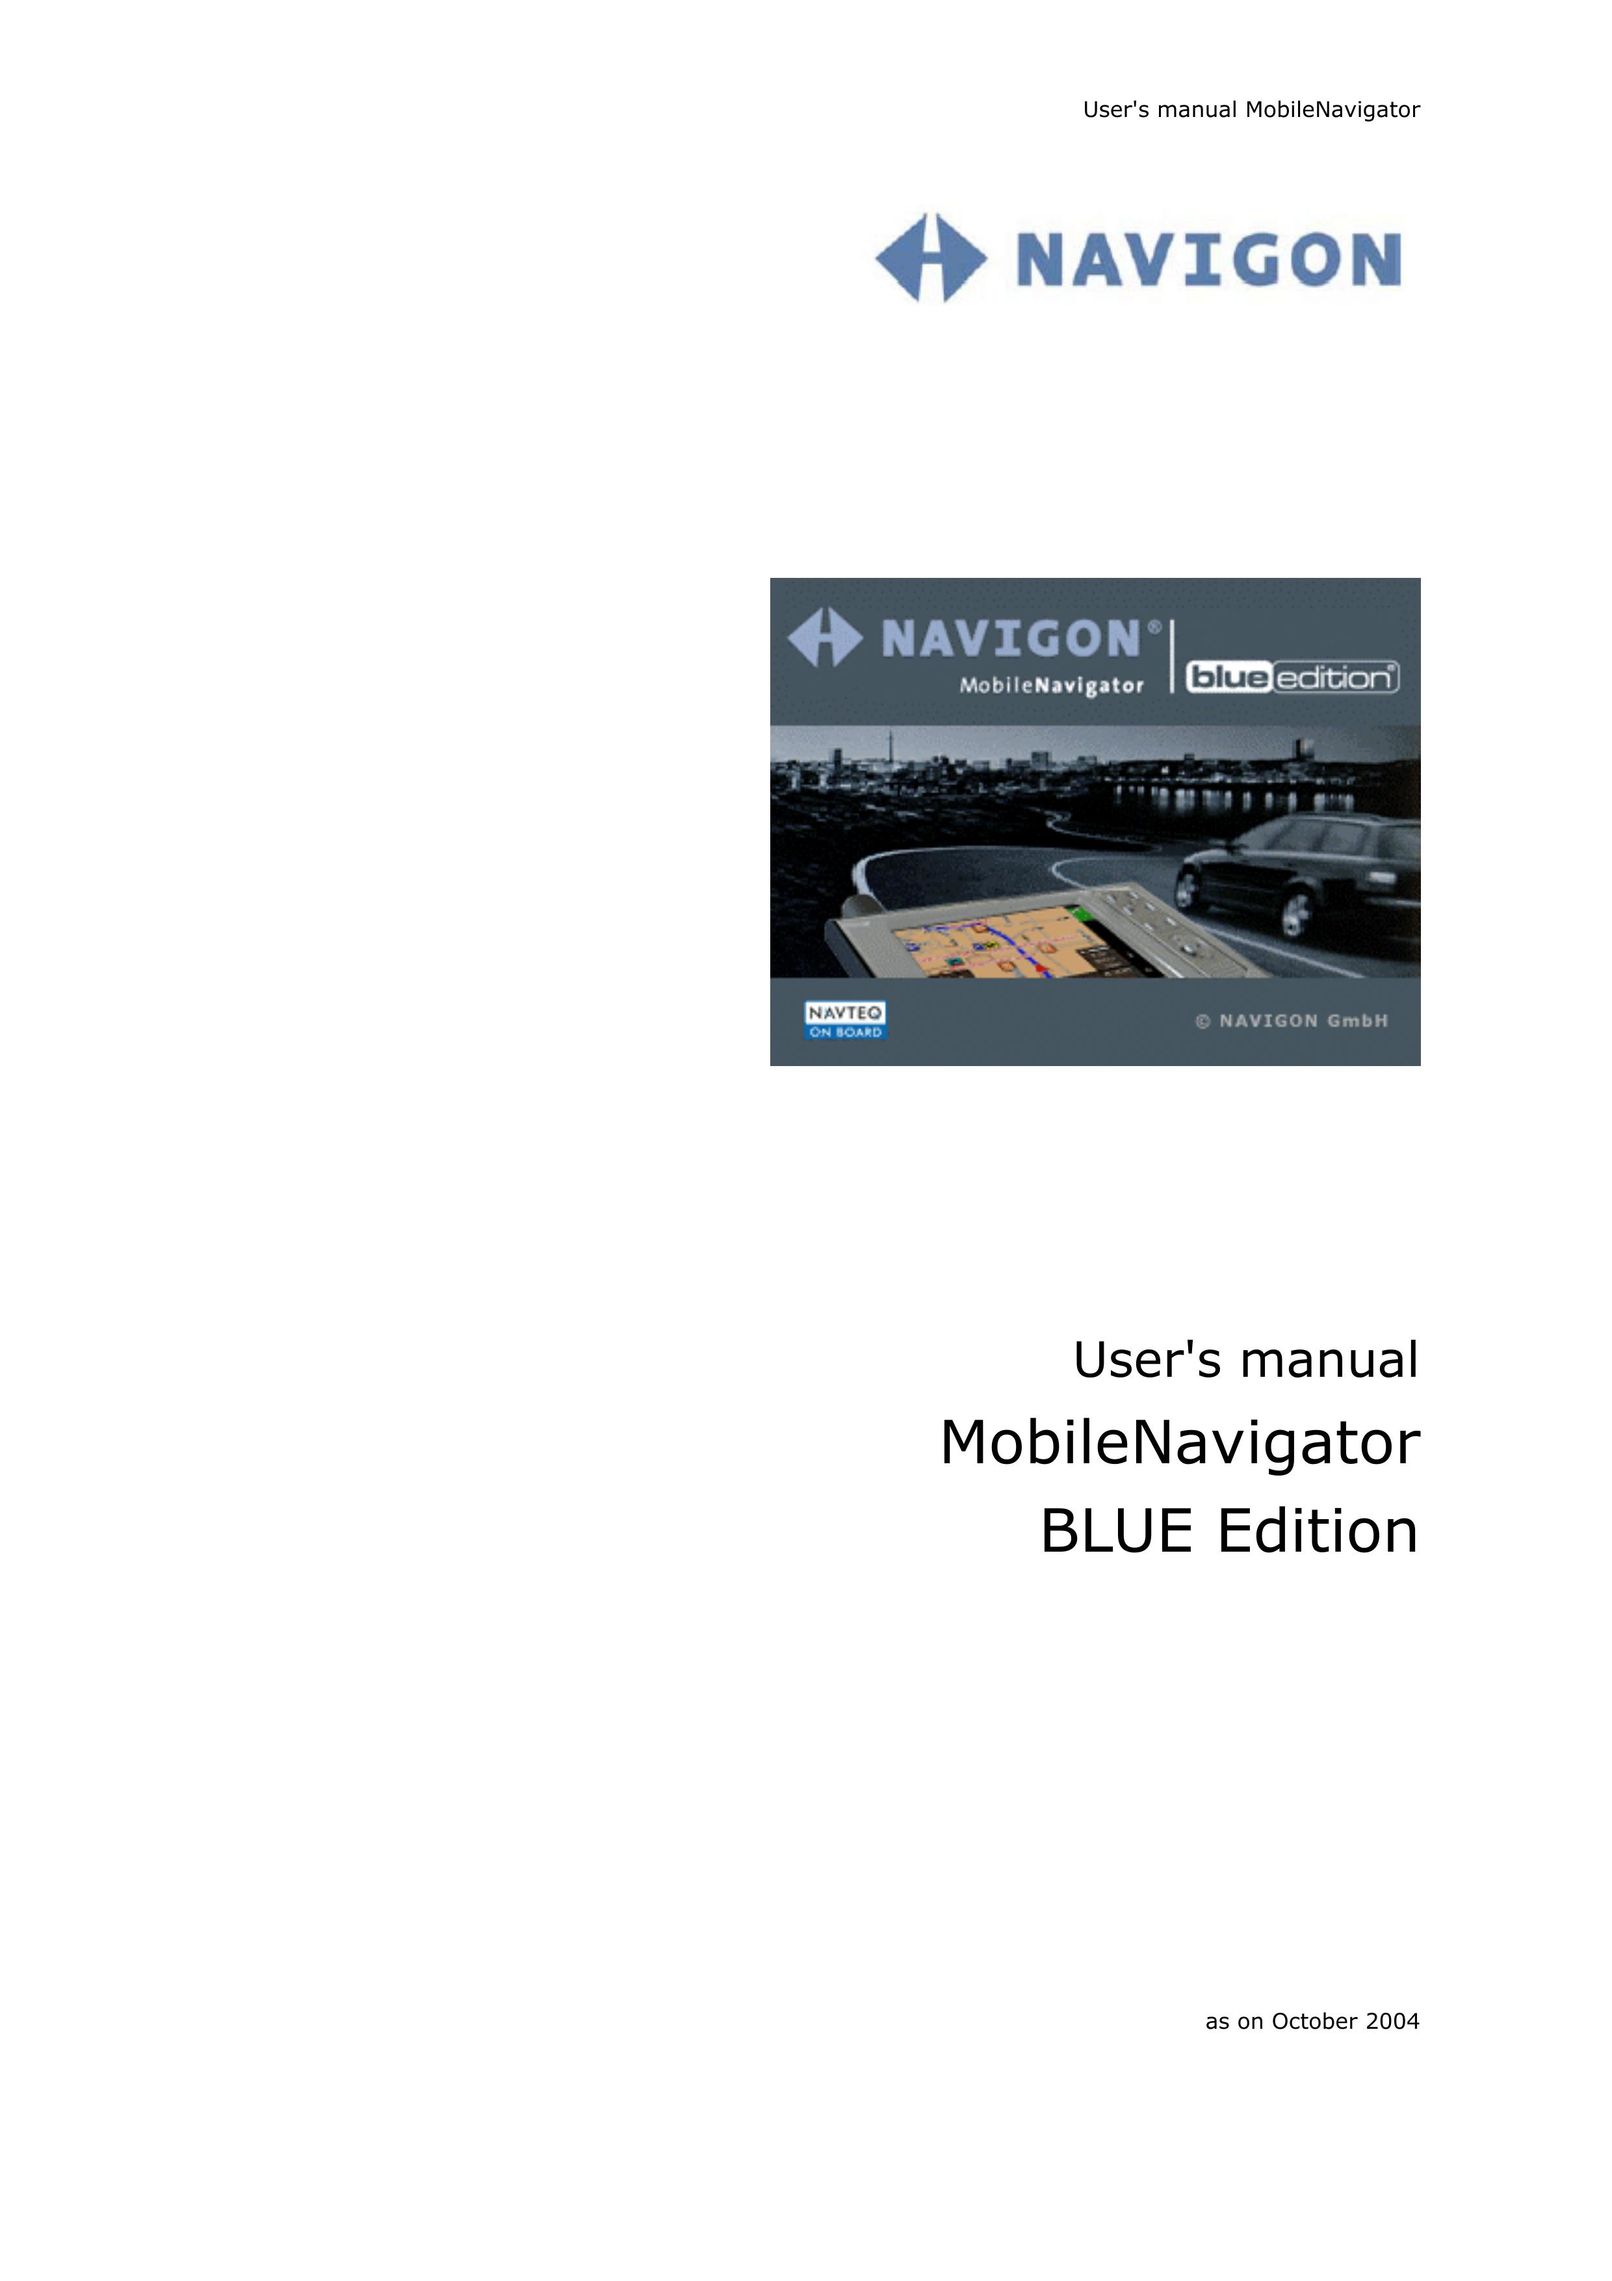 Navigon MN4 PDAs & Smartphones User Manual